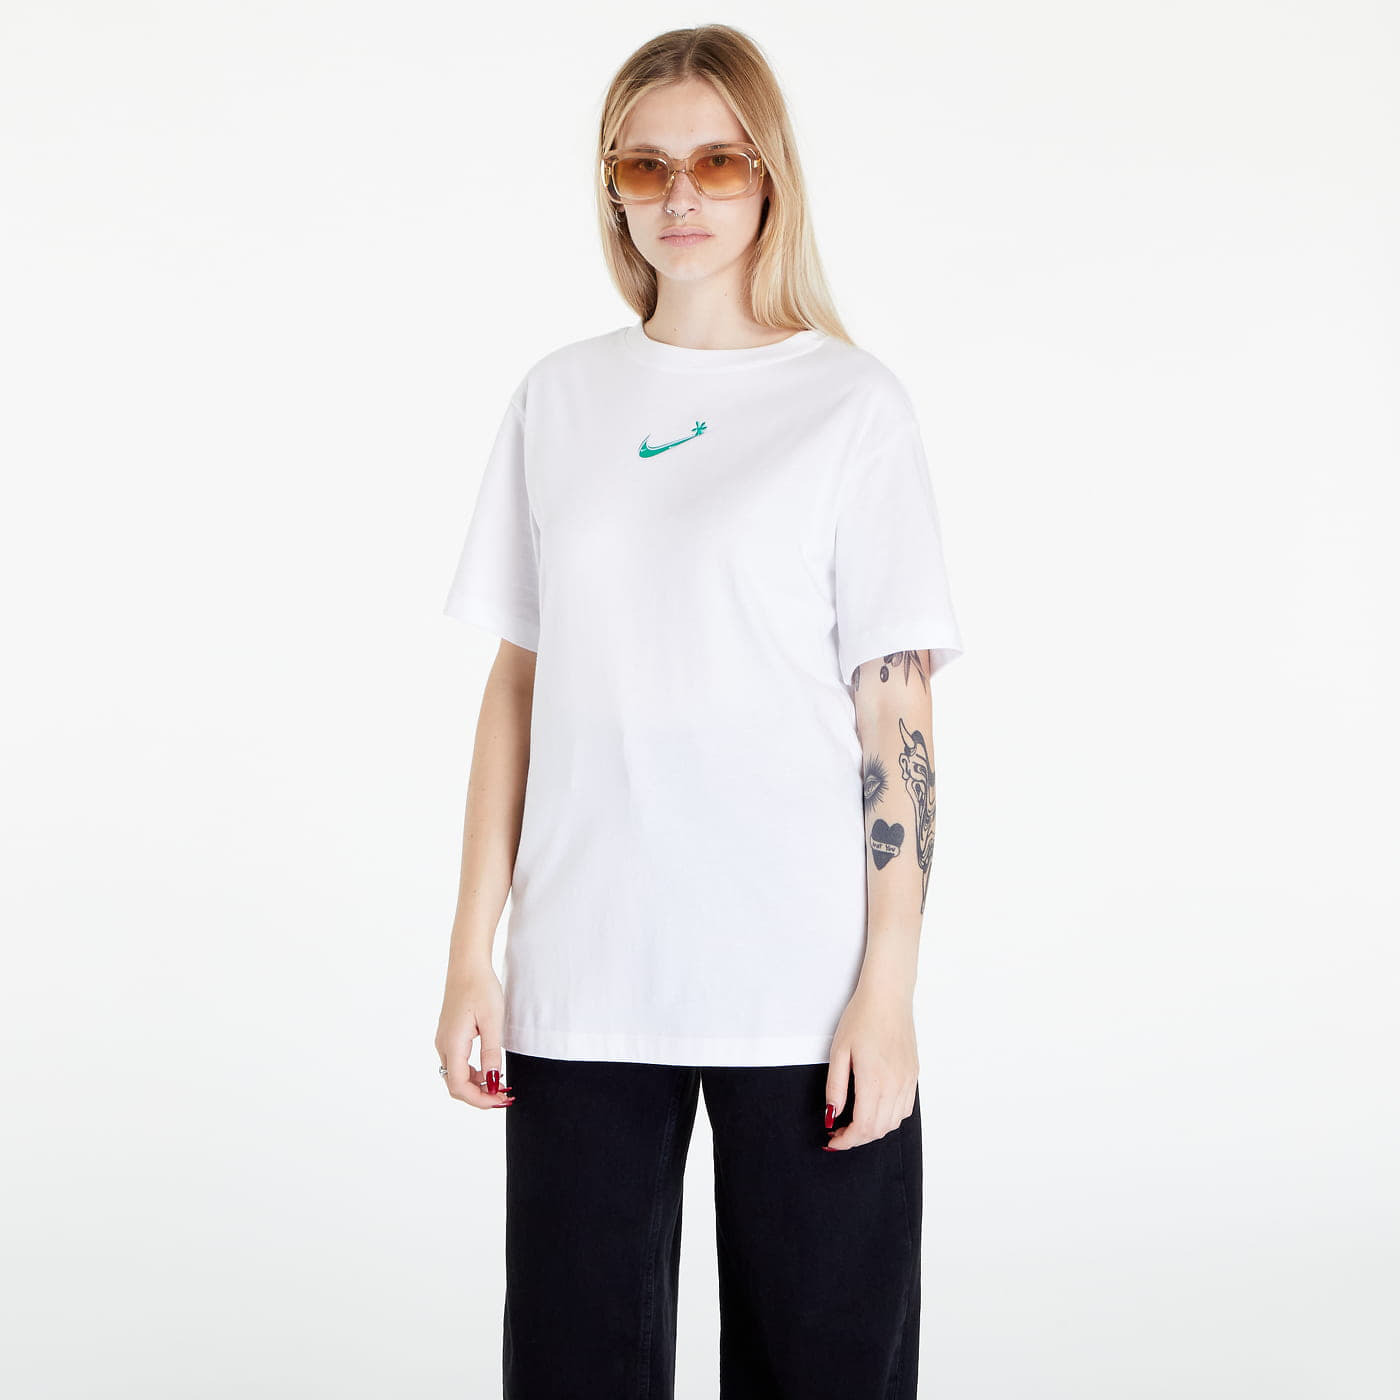 Nike - sportswear women's t-shirt white